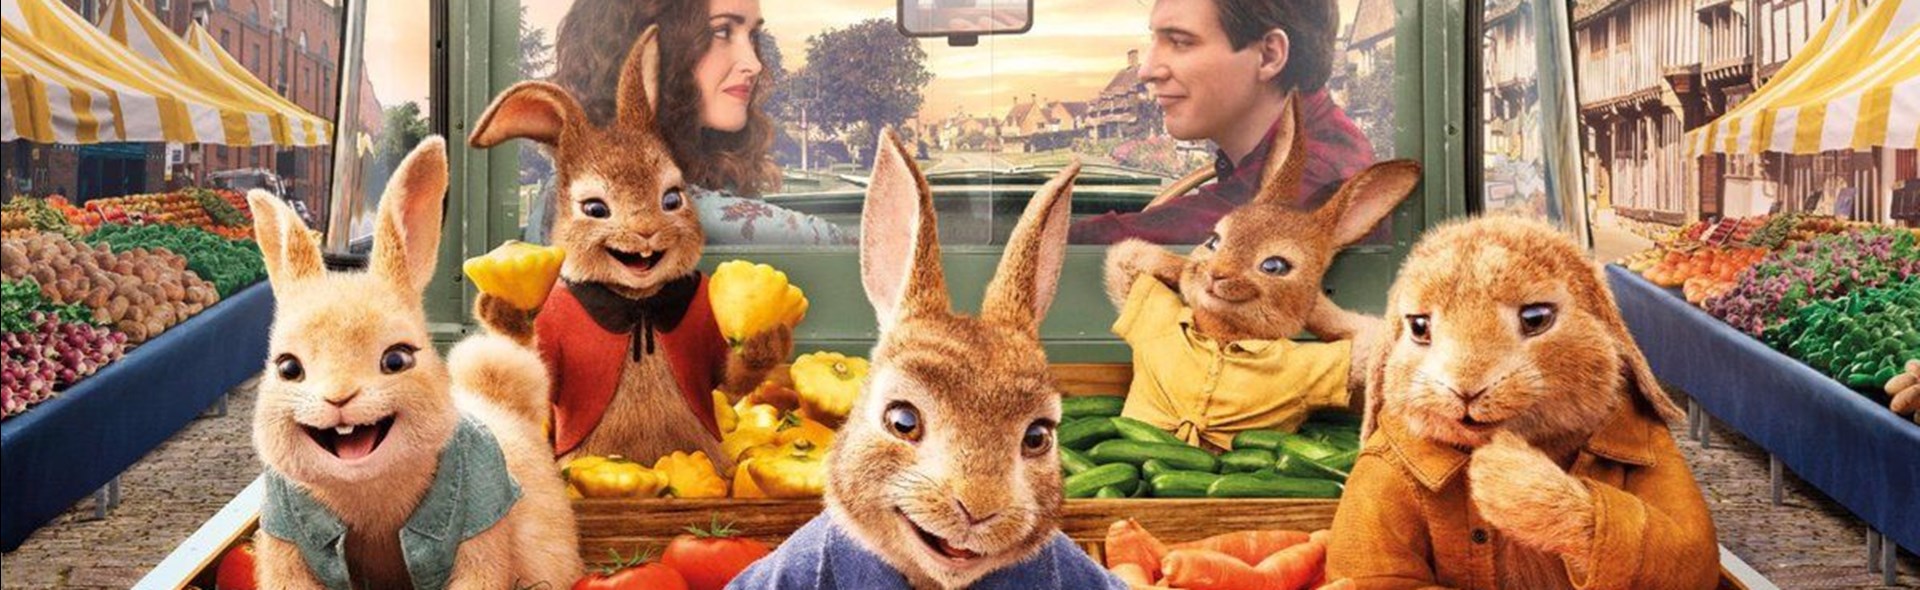 Blue Oasis Film Club Screening: Peter Rabbit 2